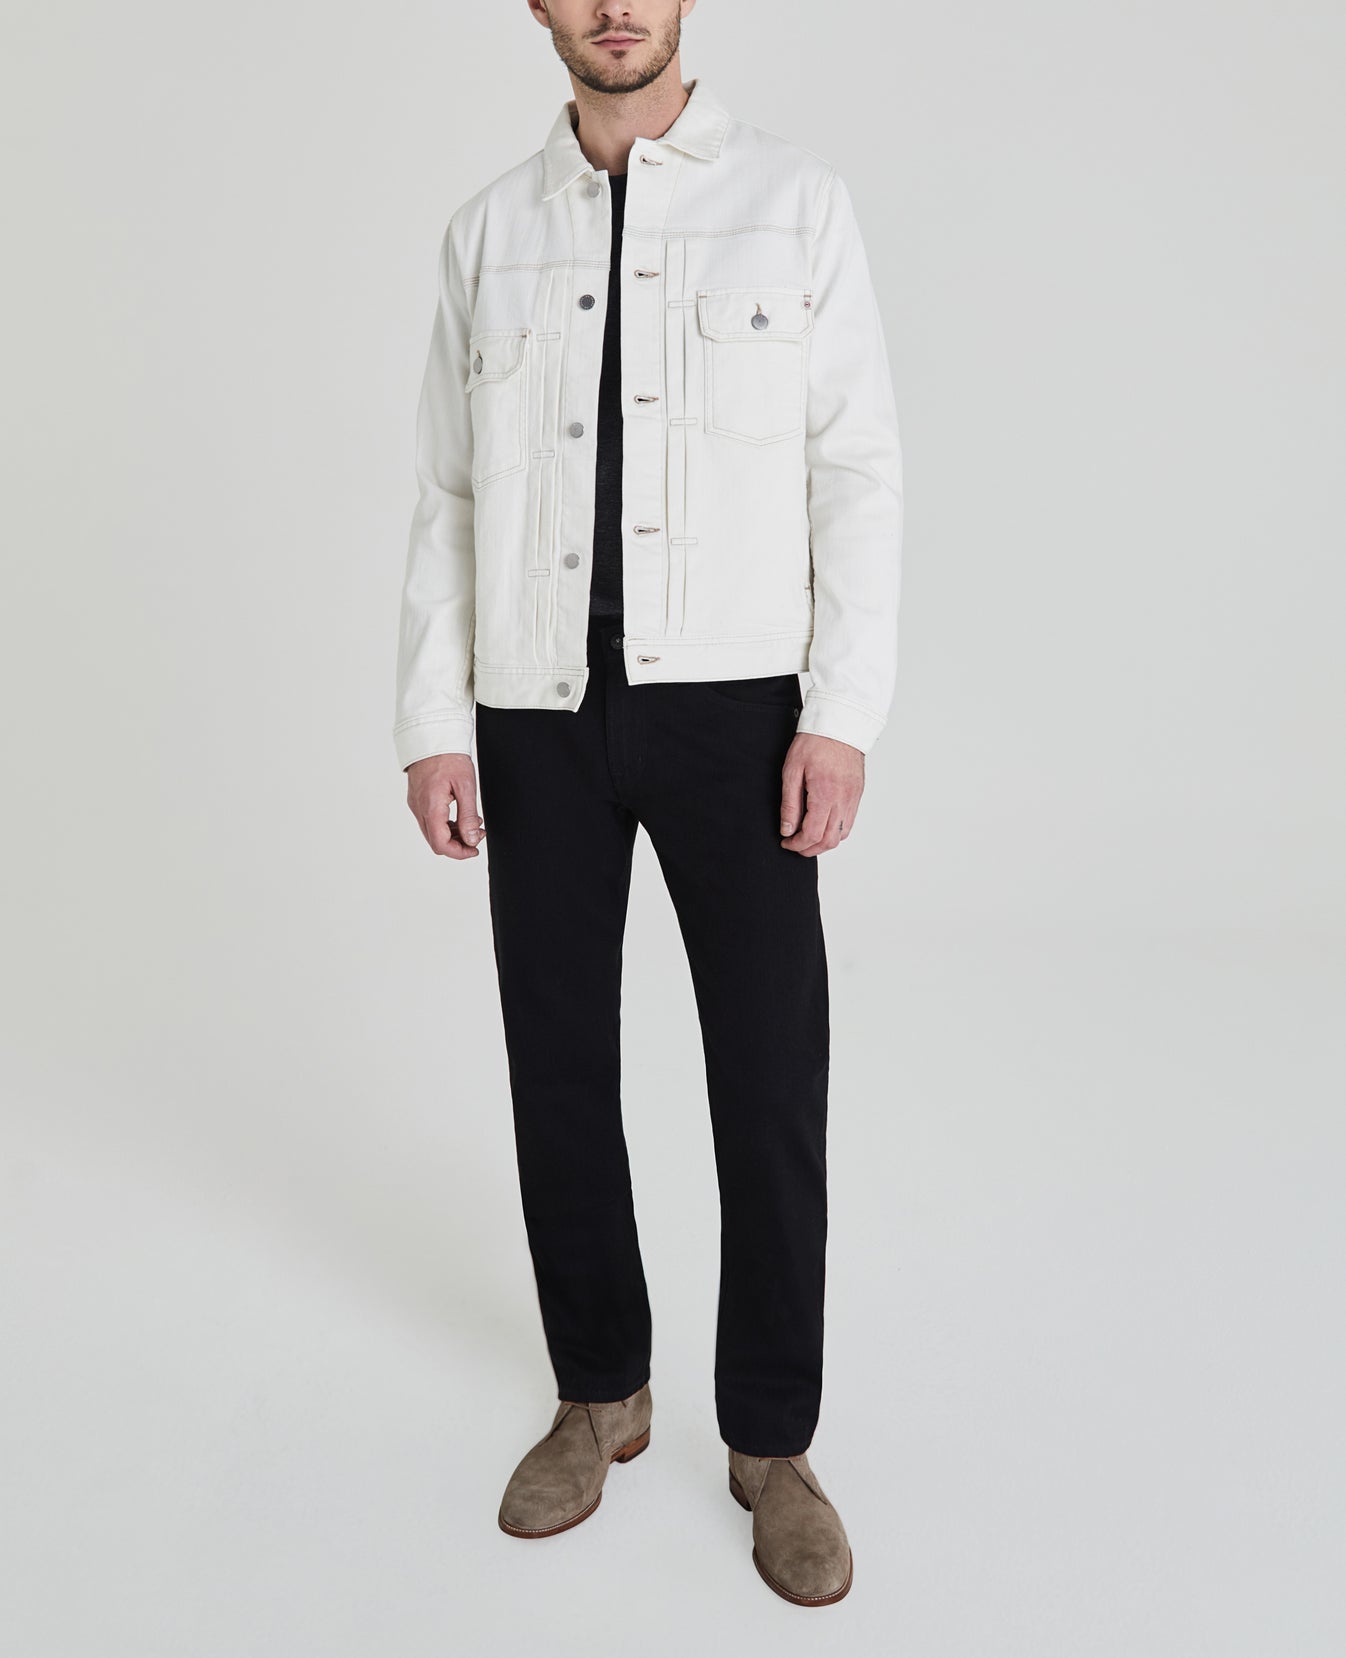 Omaha Jacket Moderne White Utilitarian Jean Jacket Men Tops Photo 6